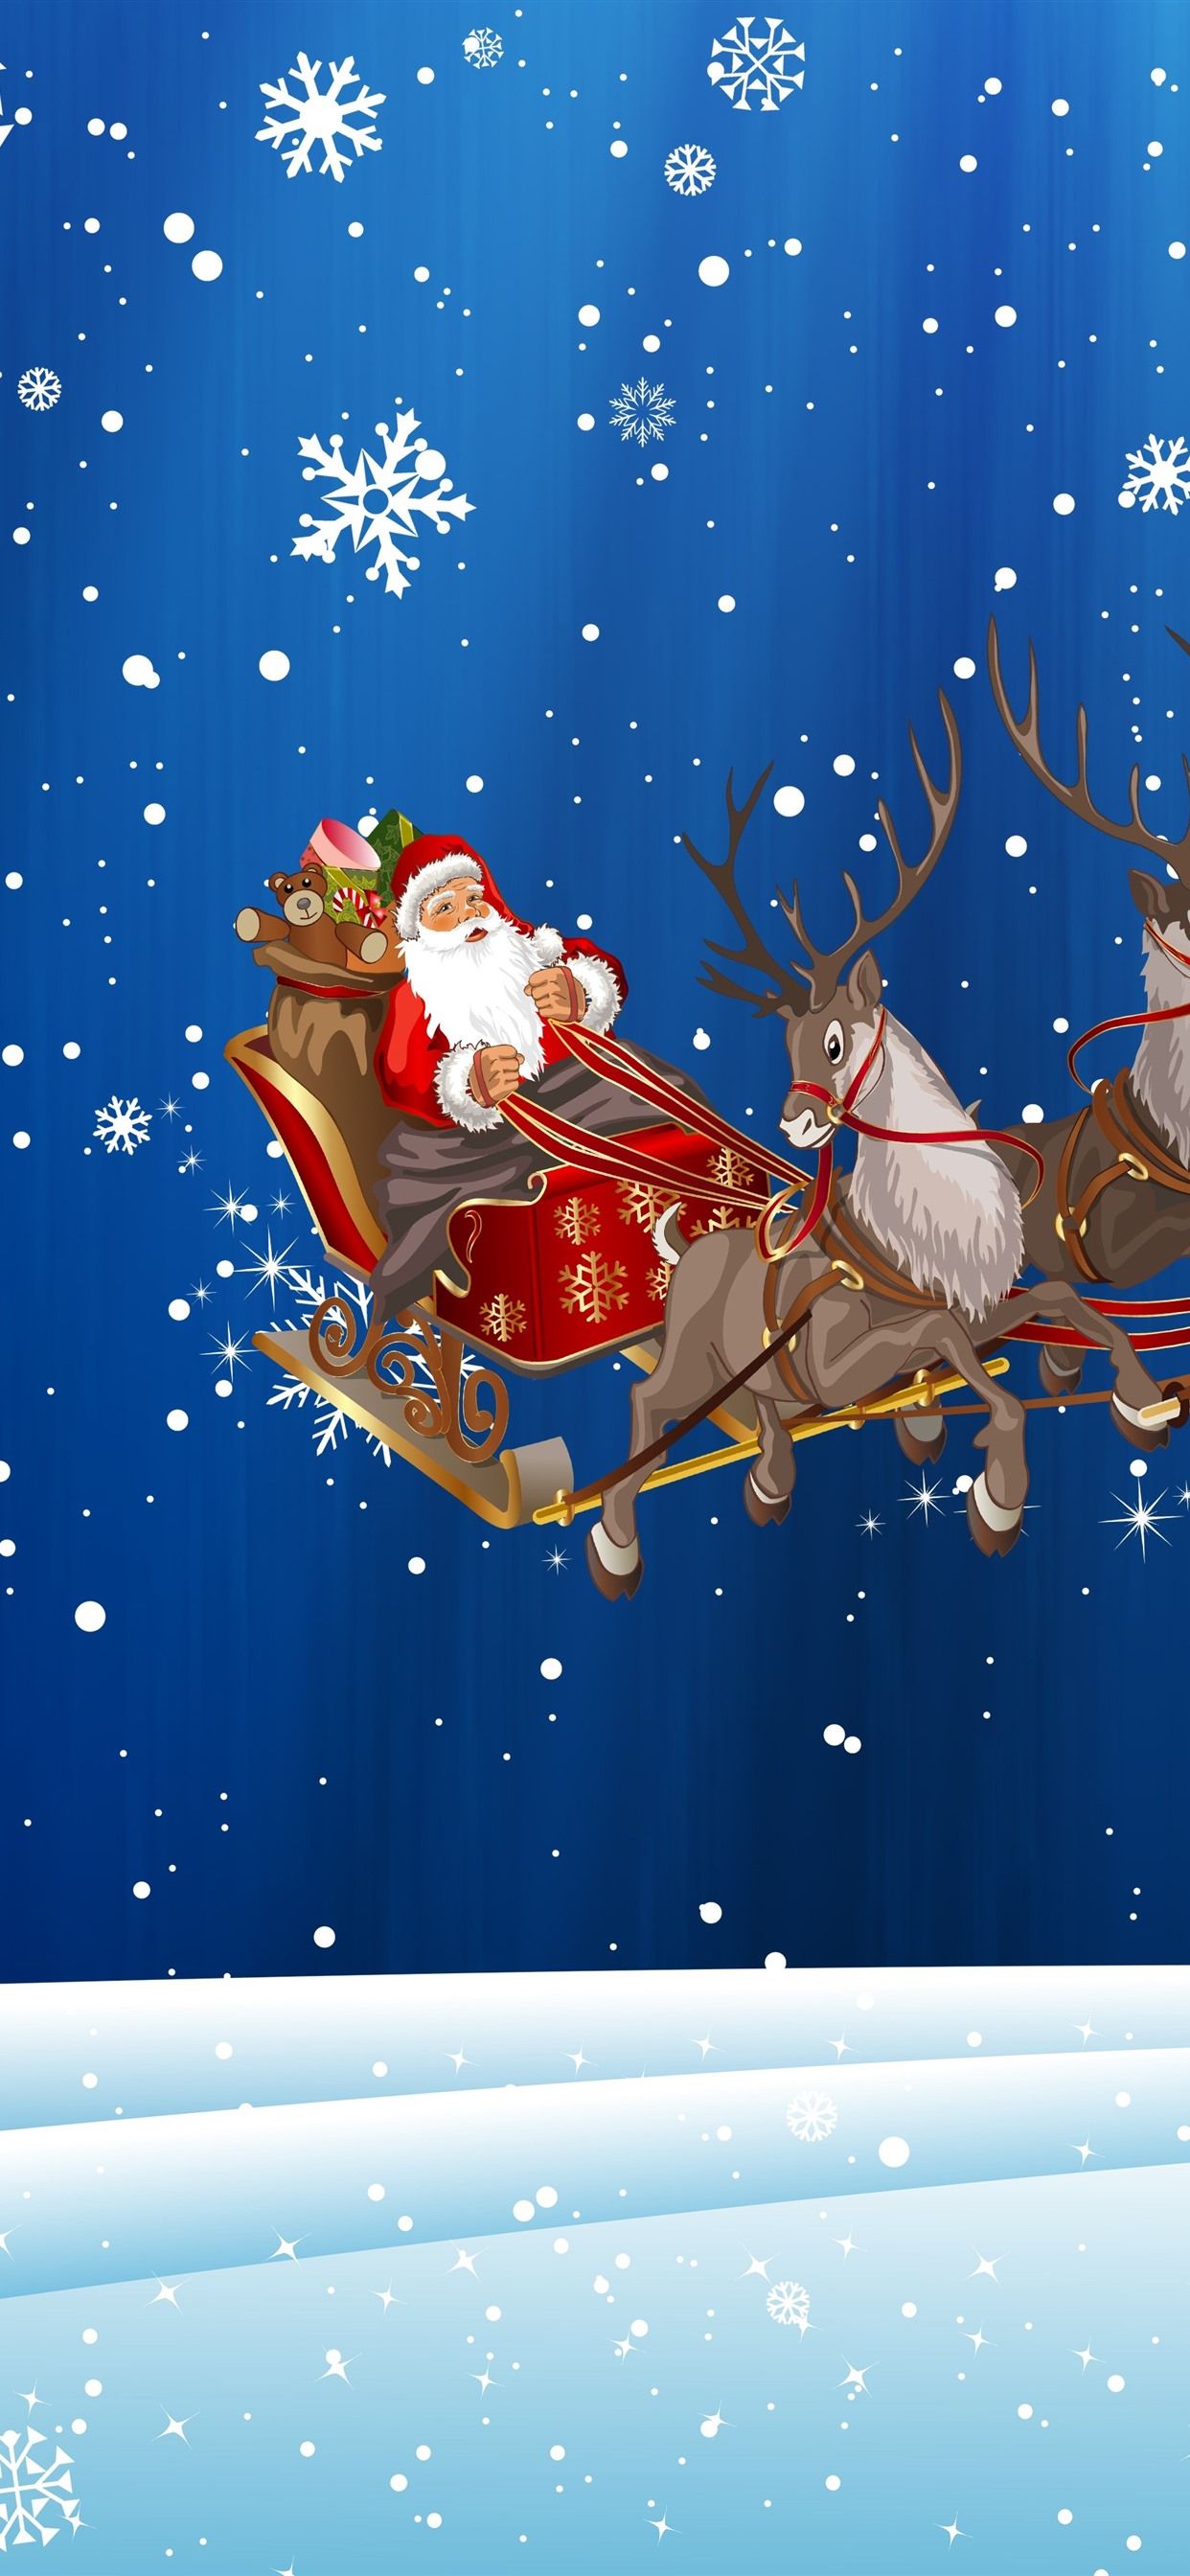 Santa Claus iPhone Wallpaper Free Santa Claus iPhone Background